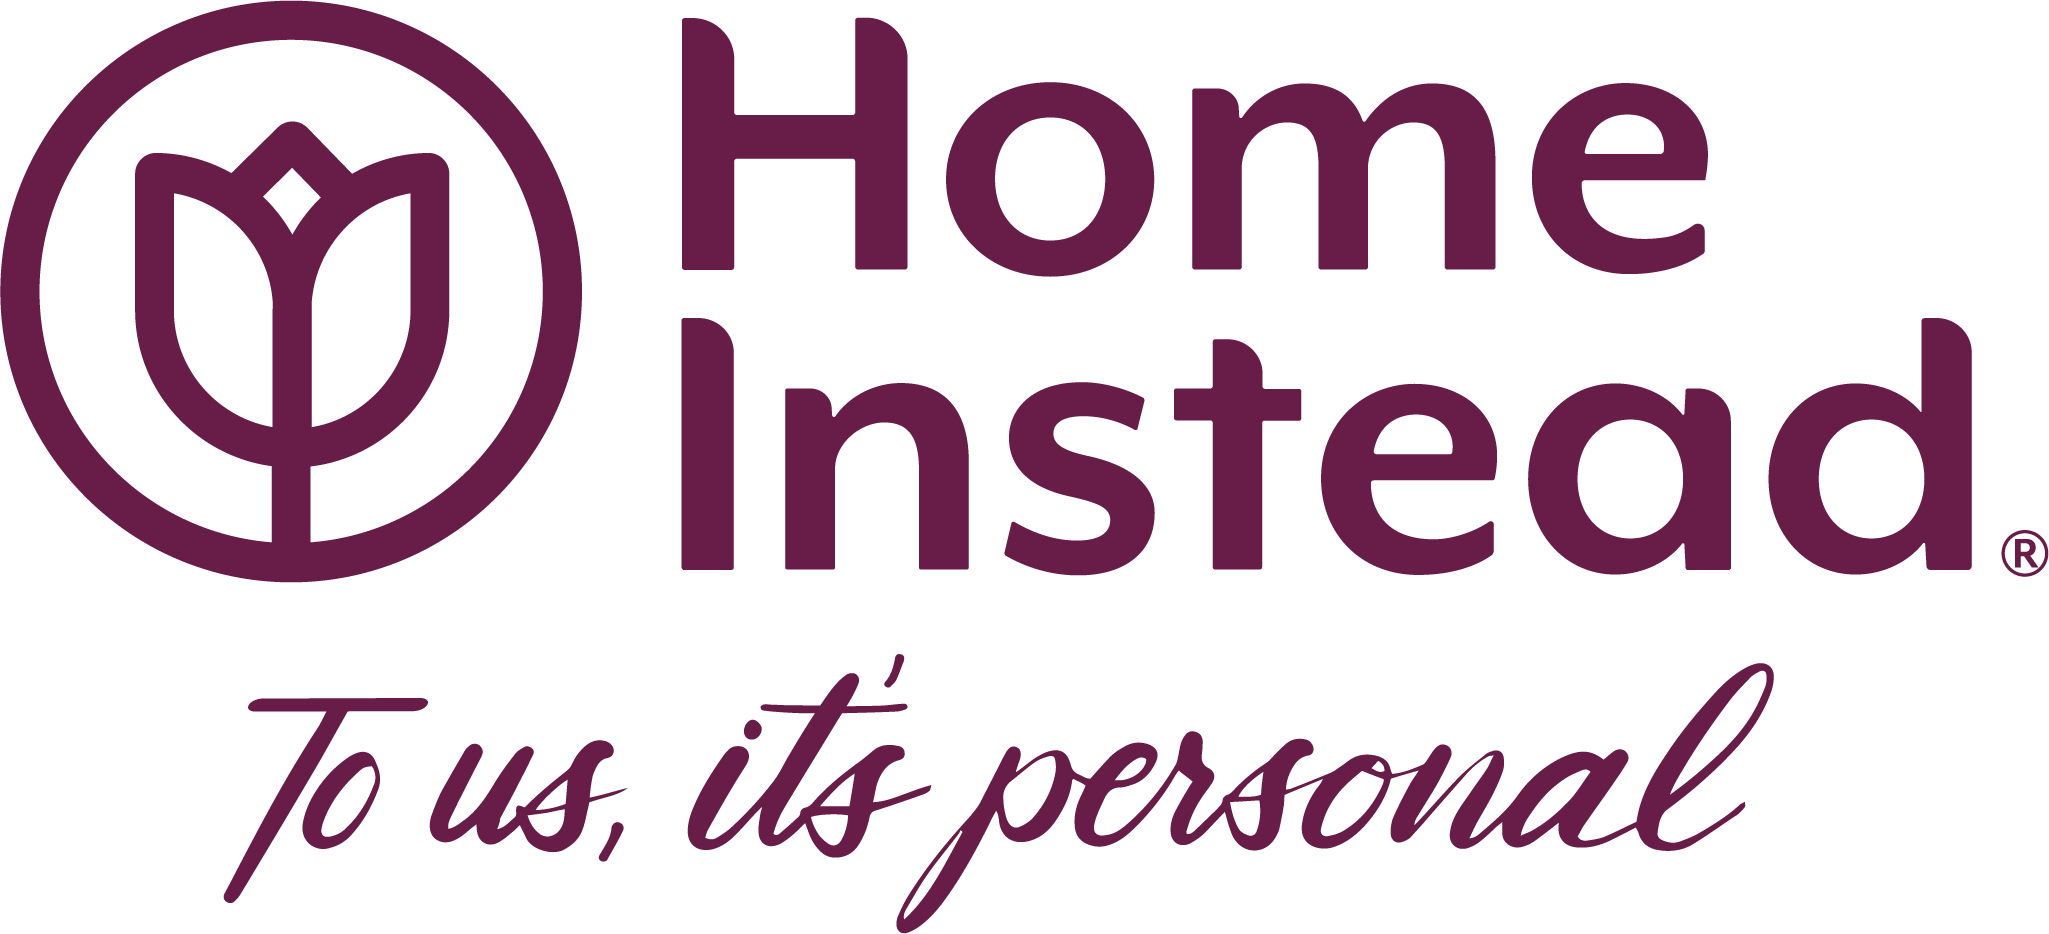 Home Instead 150/161 logo